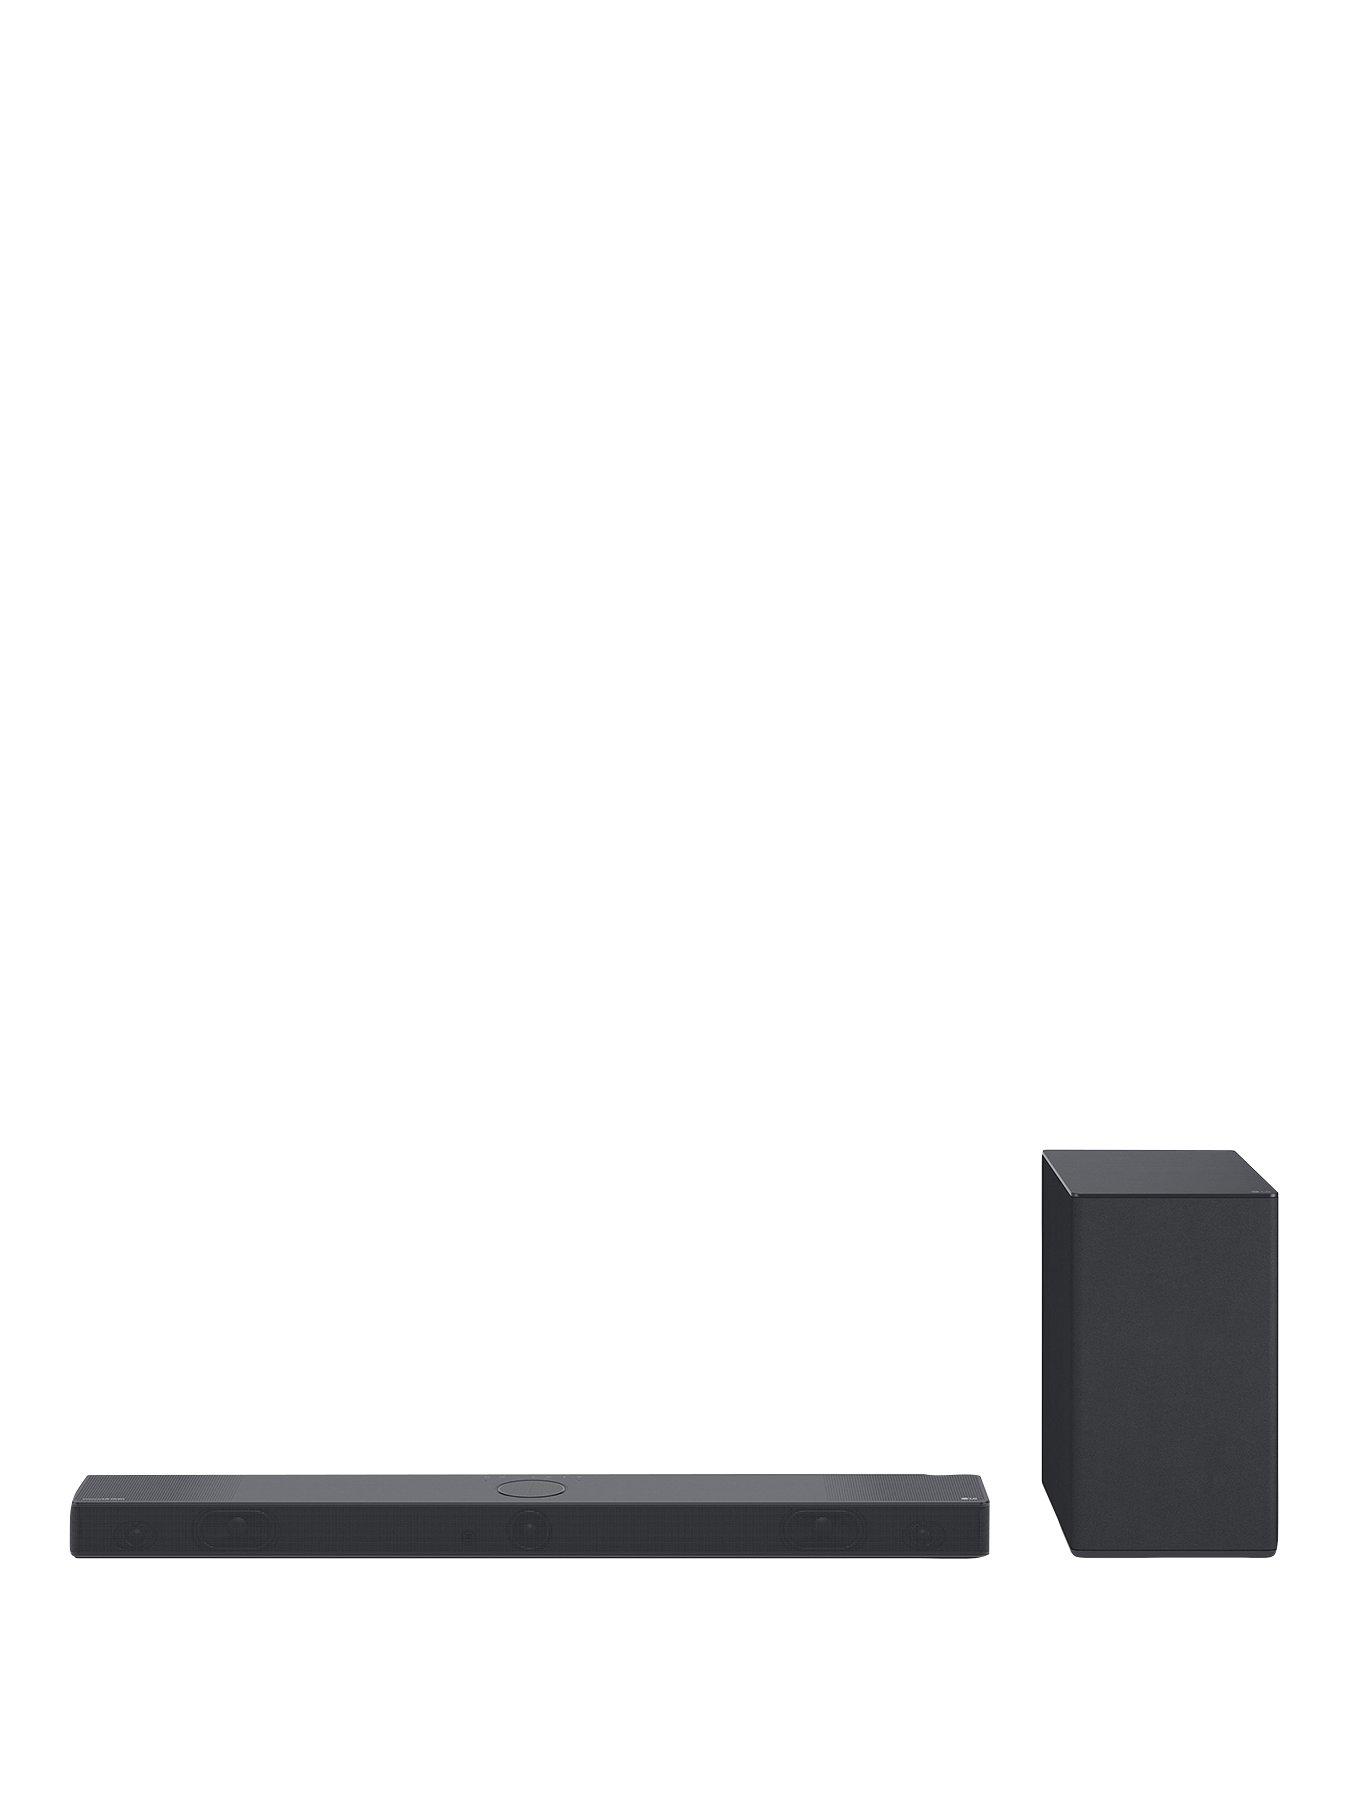 LG C3 OLED TV + SC9S Soundbar Review - A Perfect Match